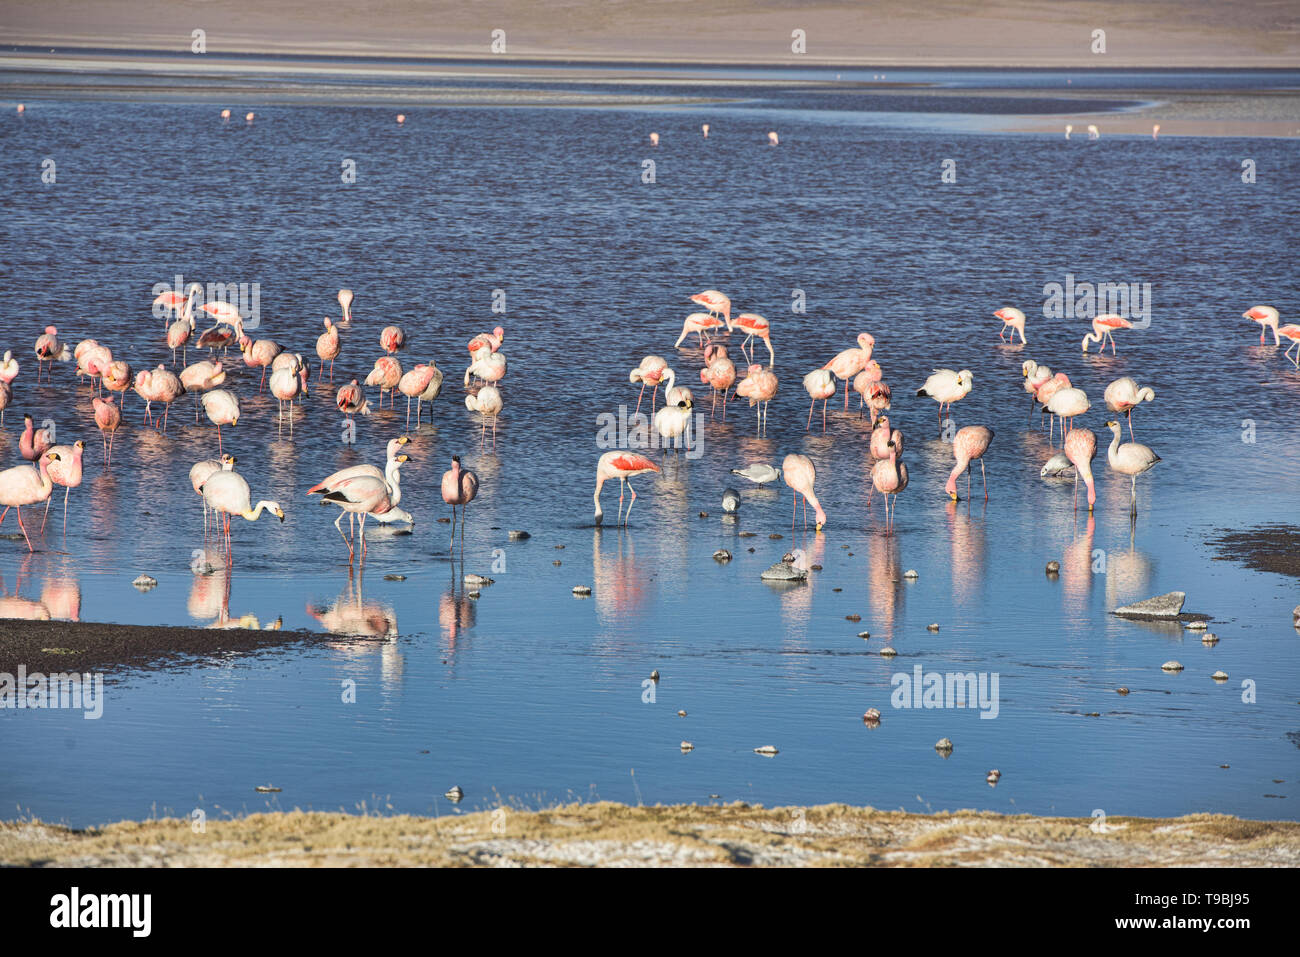 A flamboyance of James's, Andean, and Chilean flamingos on Laguna Colorada, Salar de Uyuni, Bolivia Stock Photo